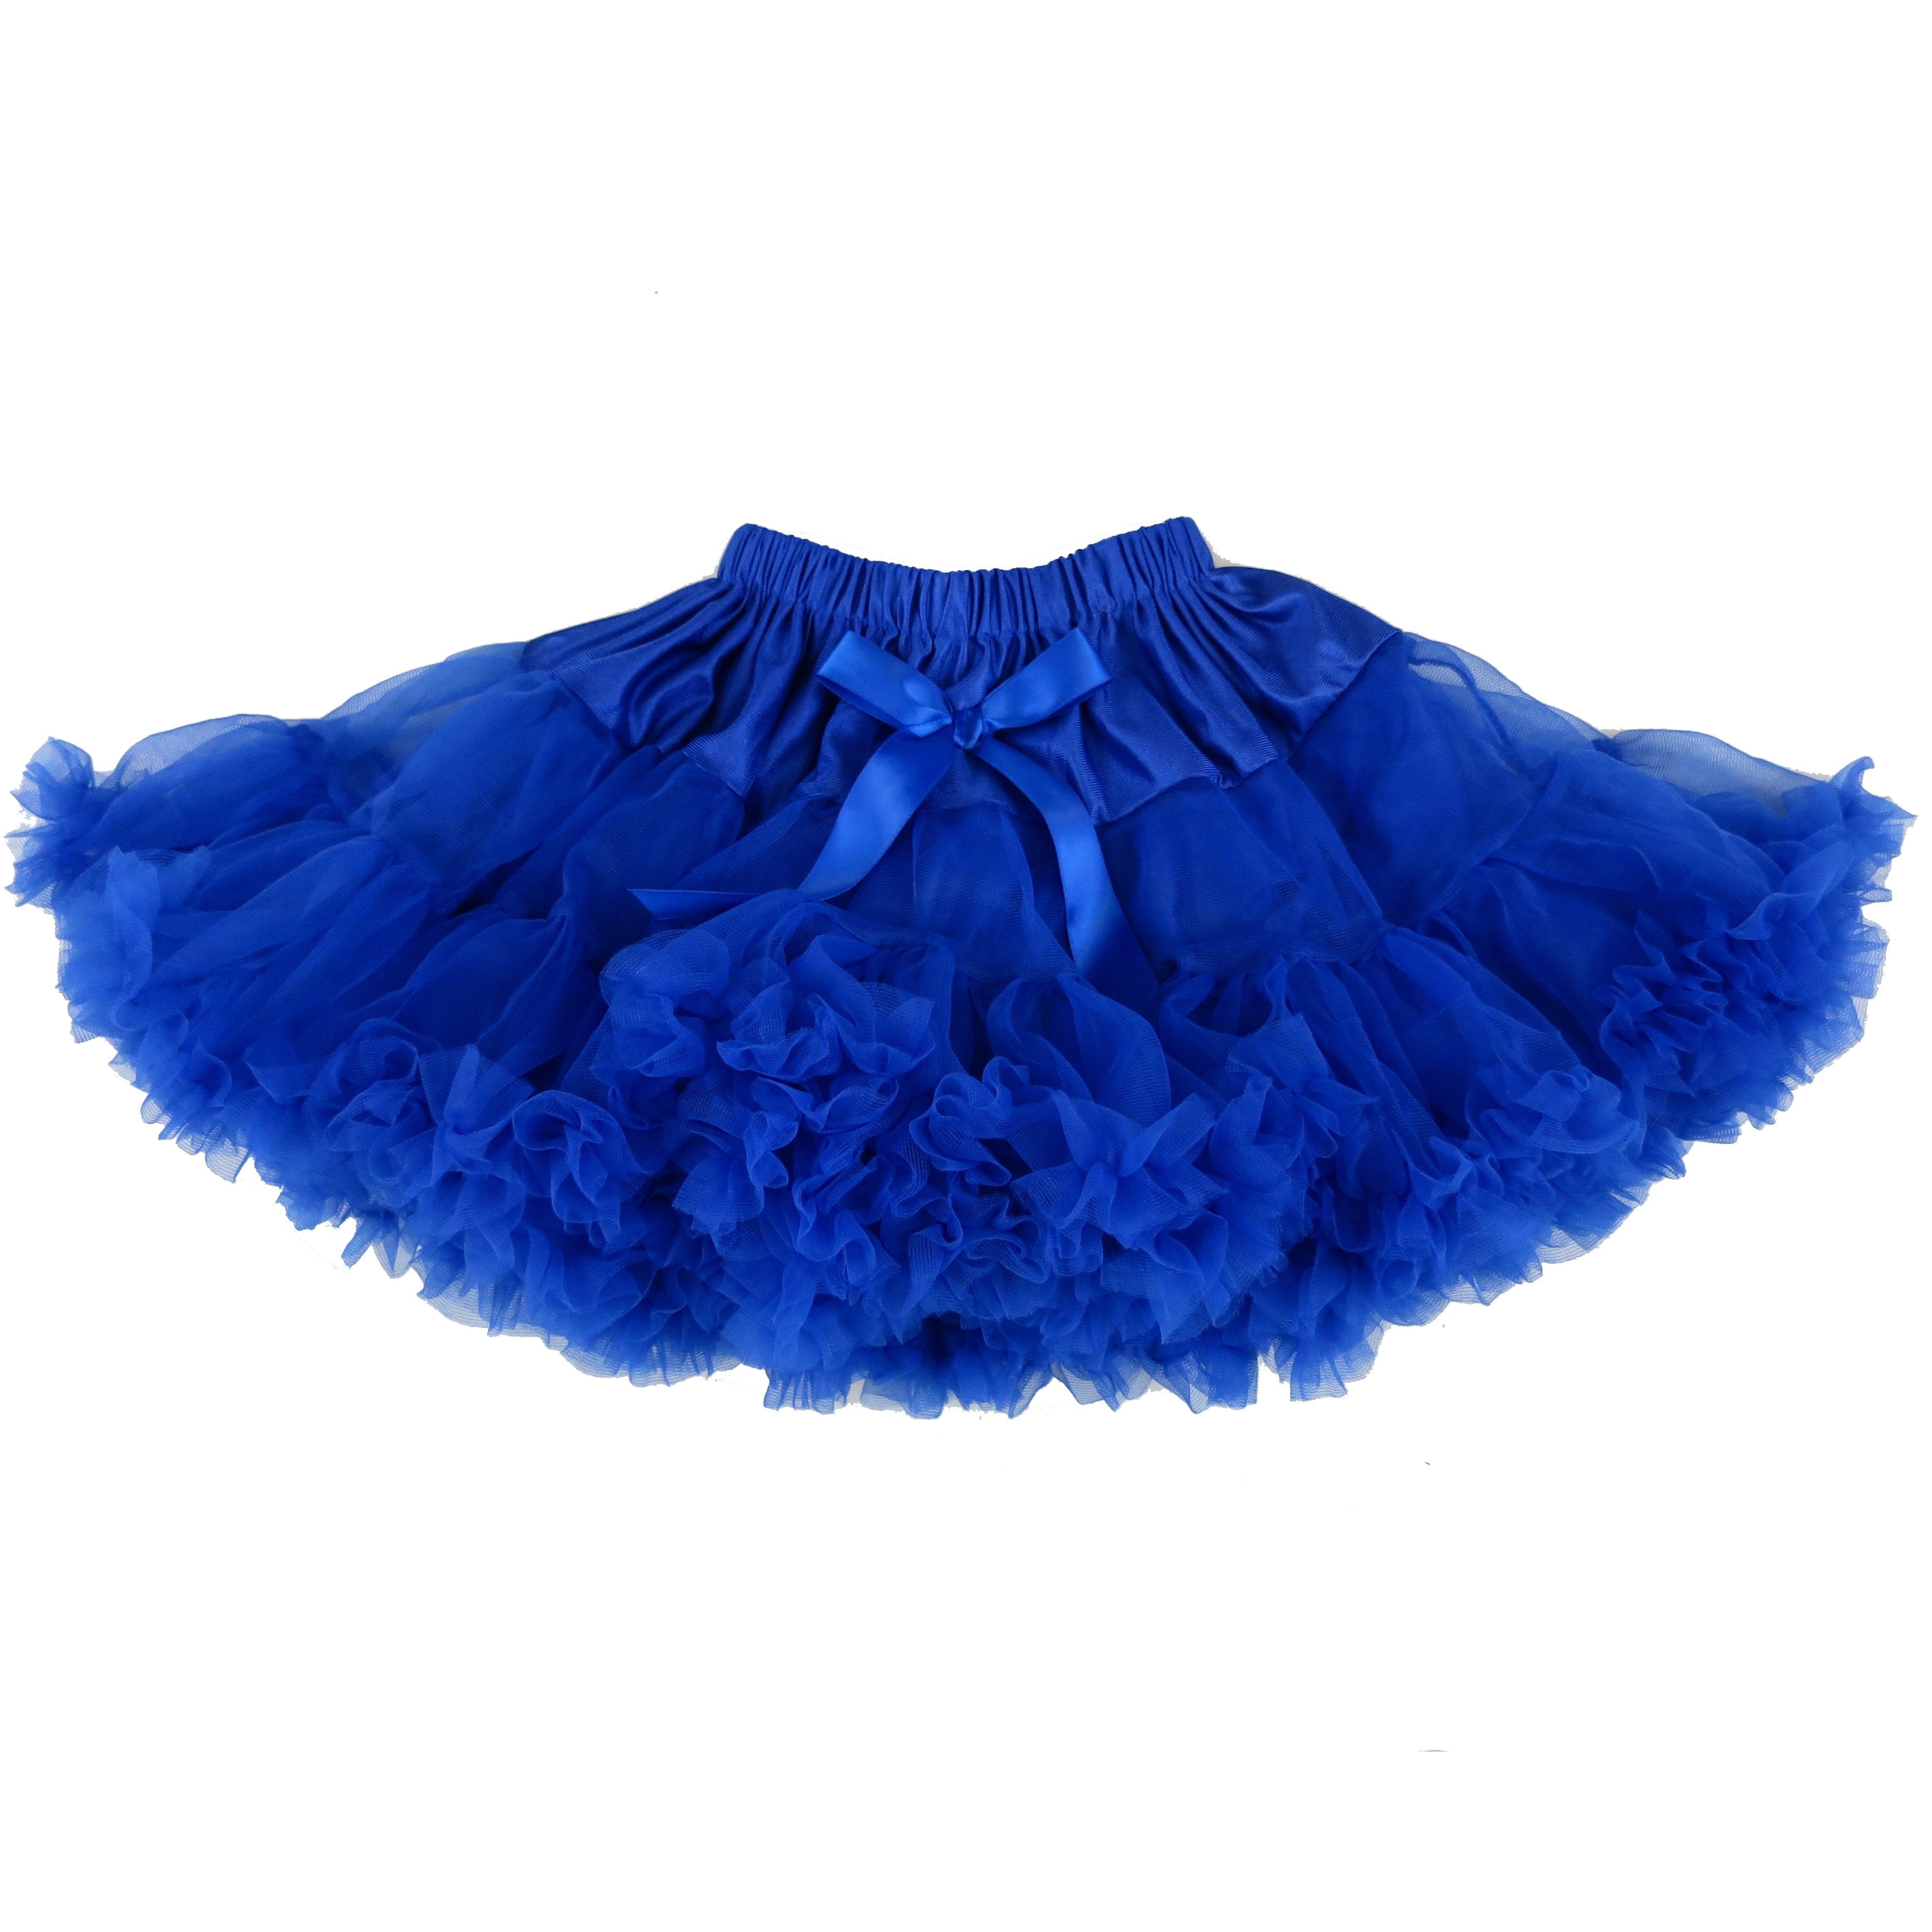 wenchoice Girls Fluffy Royal Blue Petti SkirtÂ�